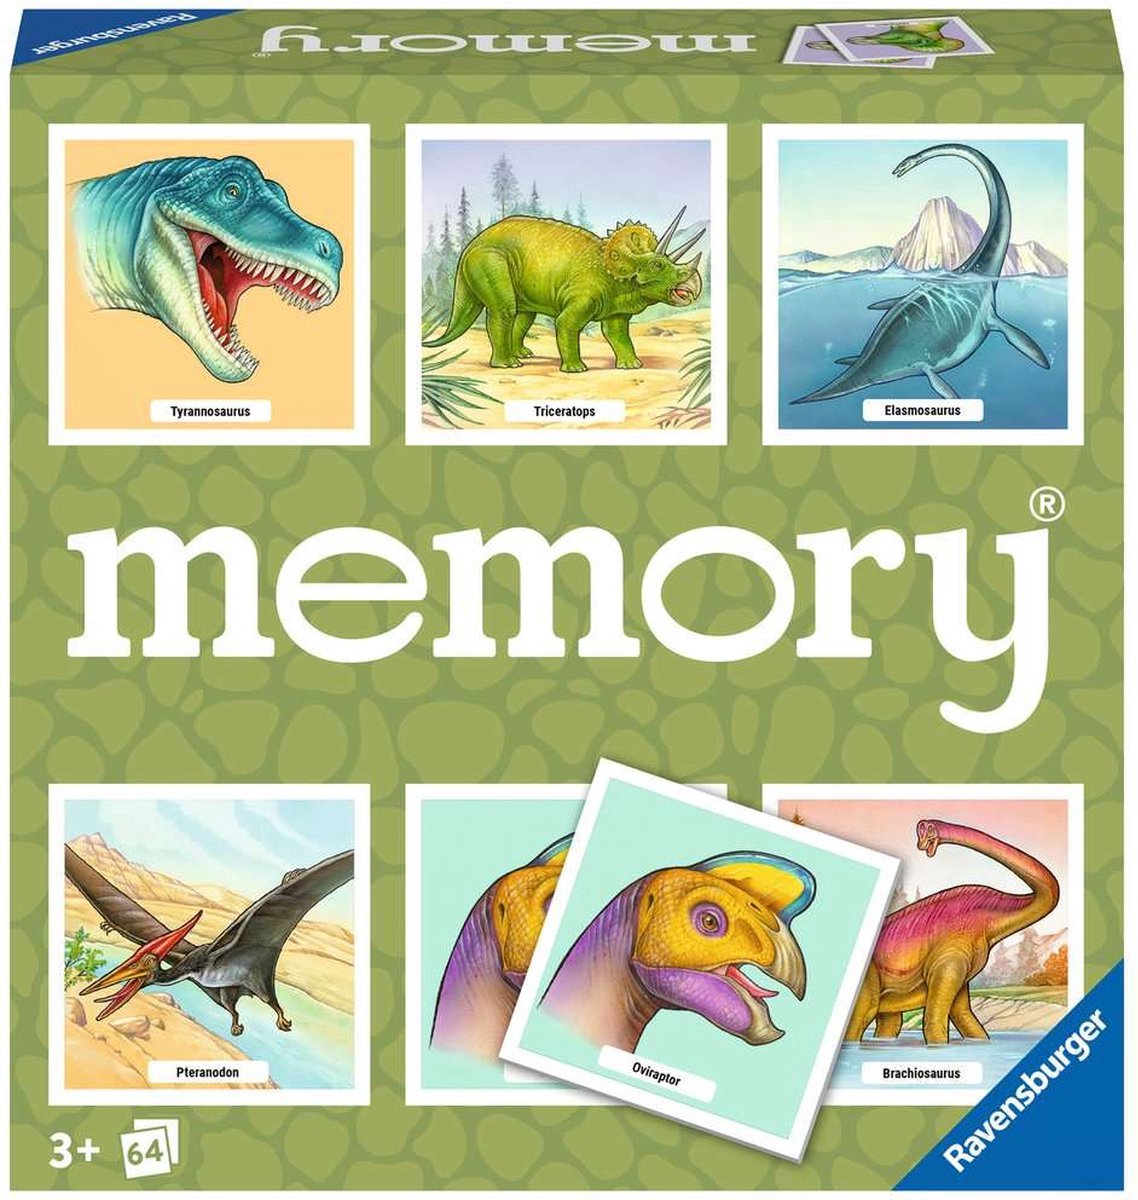   Dinosaurussen memory®